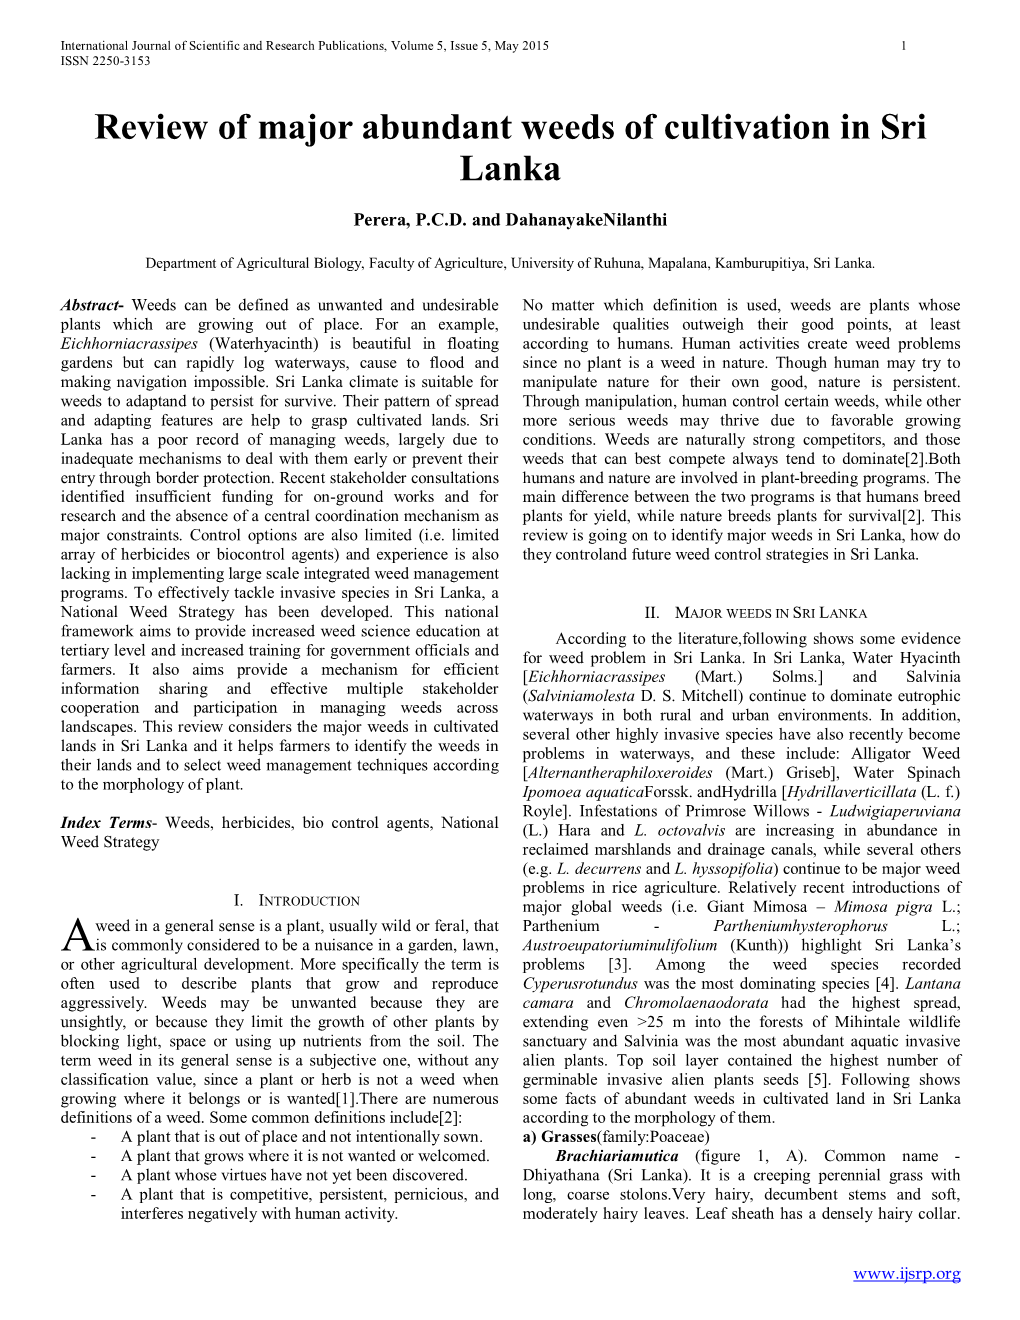 Review of Major Abundant Weeds of Cultivation in Sri Lanka